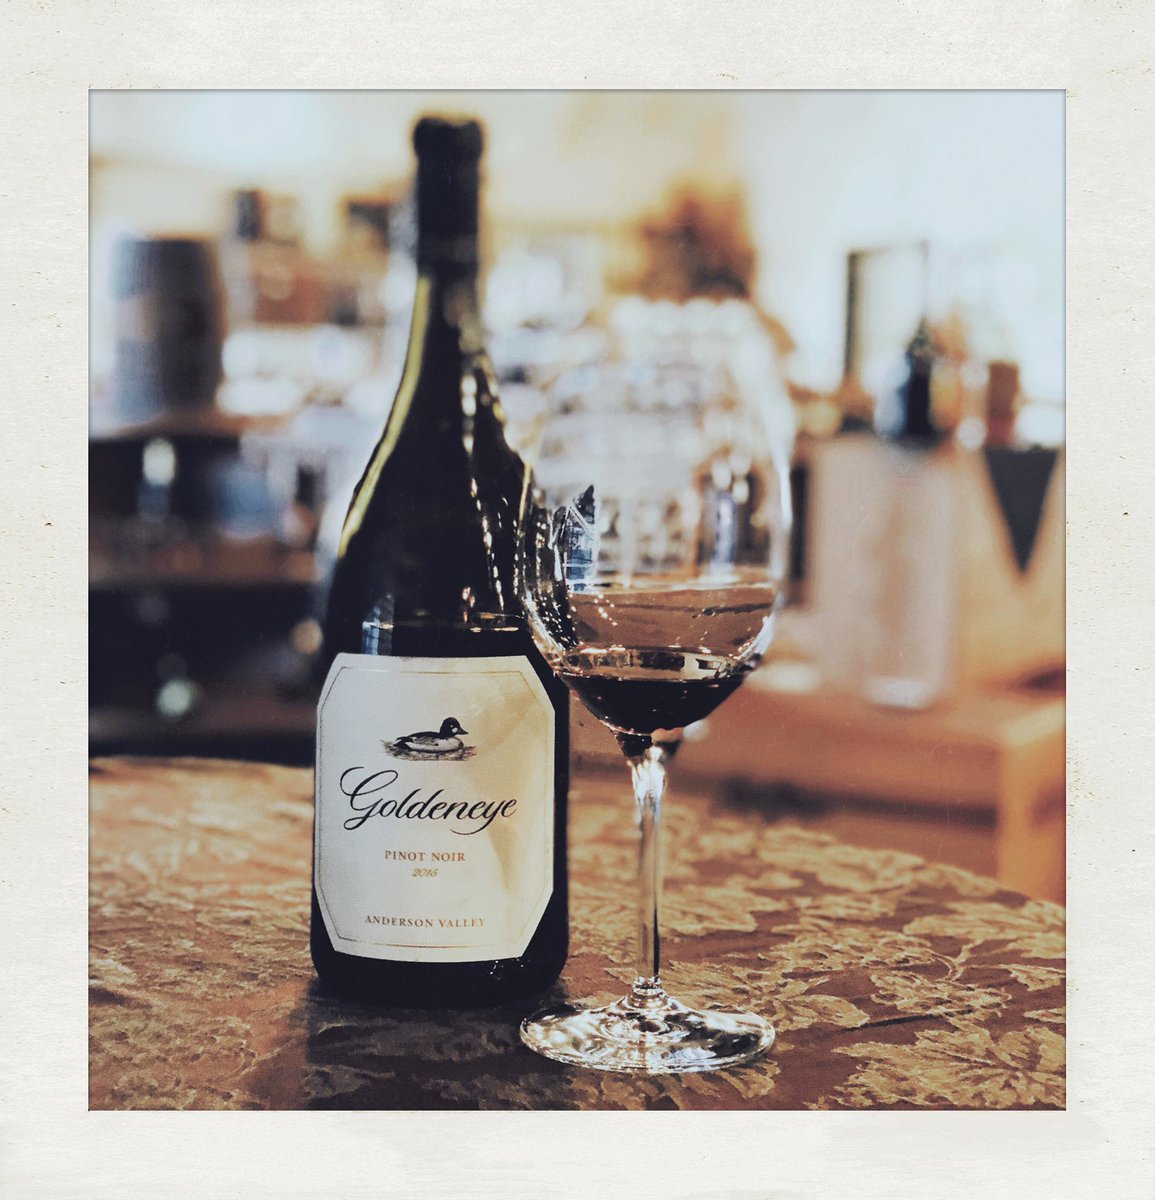 Enjoying a glass of #Goldeneye #PinotNoir @JGwines in #SanJose, #California. Why don’t you pick it for your #WineWednesday? #Cheers! 🔝 #highlinewine #wednesday #waybackwednesday #nyc #chelseanyc #wine #winelovers #californiawine #eastcoasttowestcoast 🍇 🍷